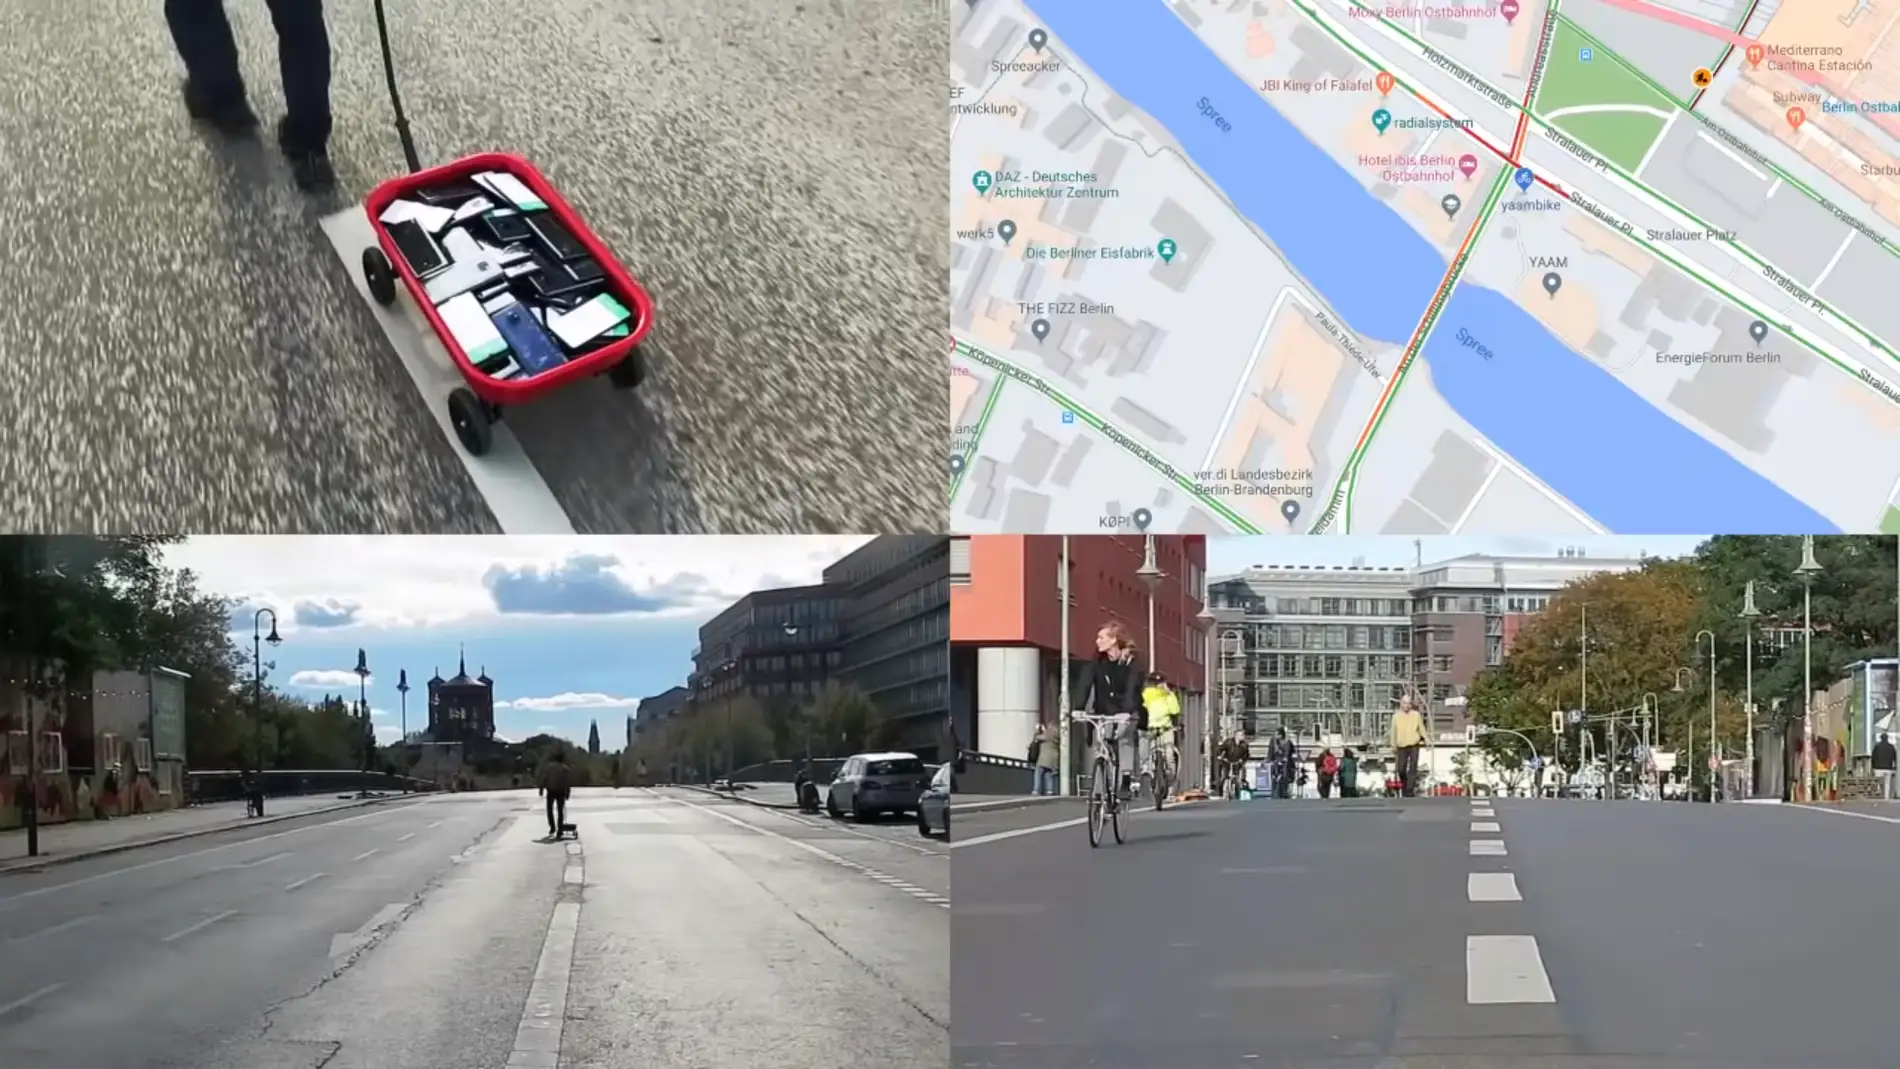 El artista Simon Weckert recorrió las calles de Berlín con 99 móviles